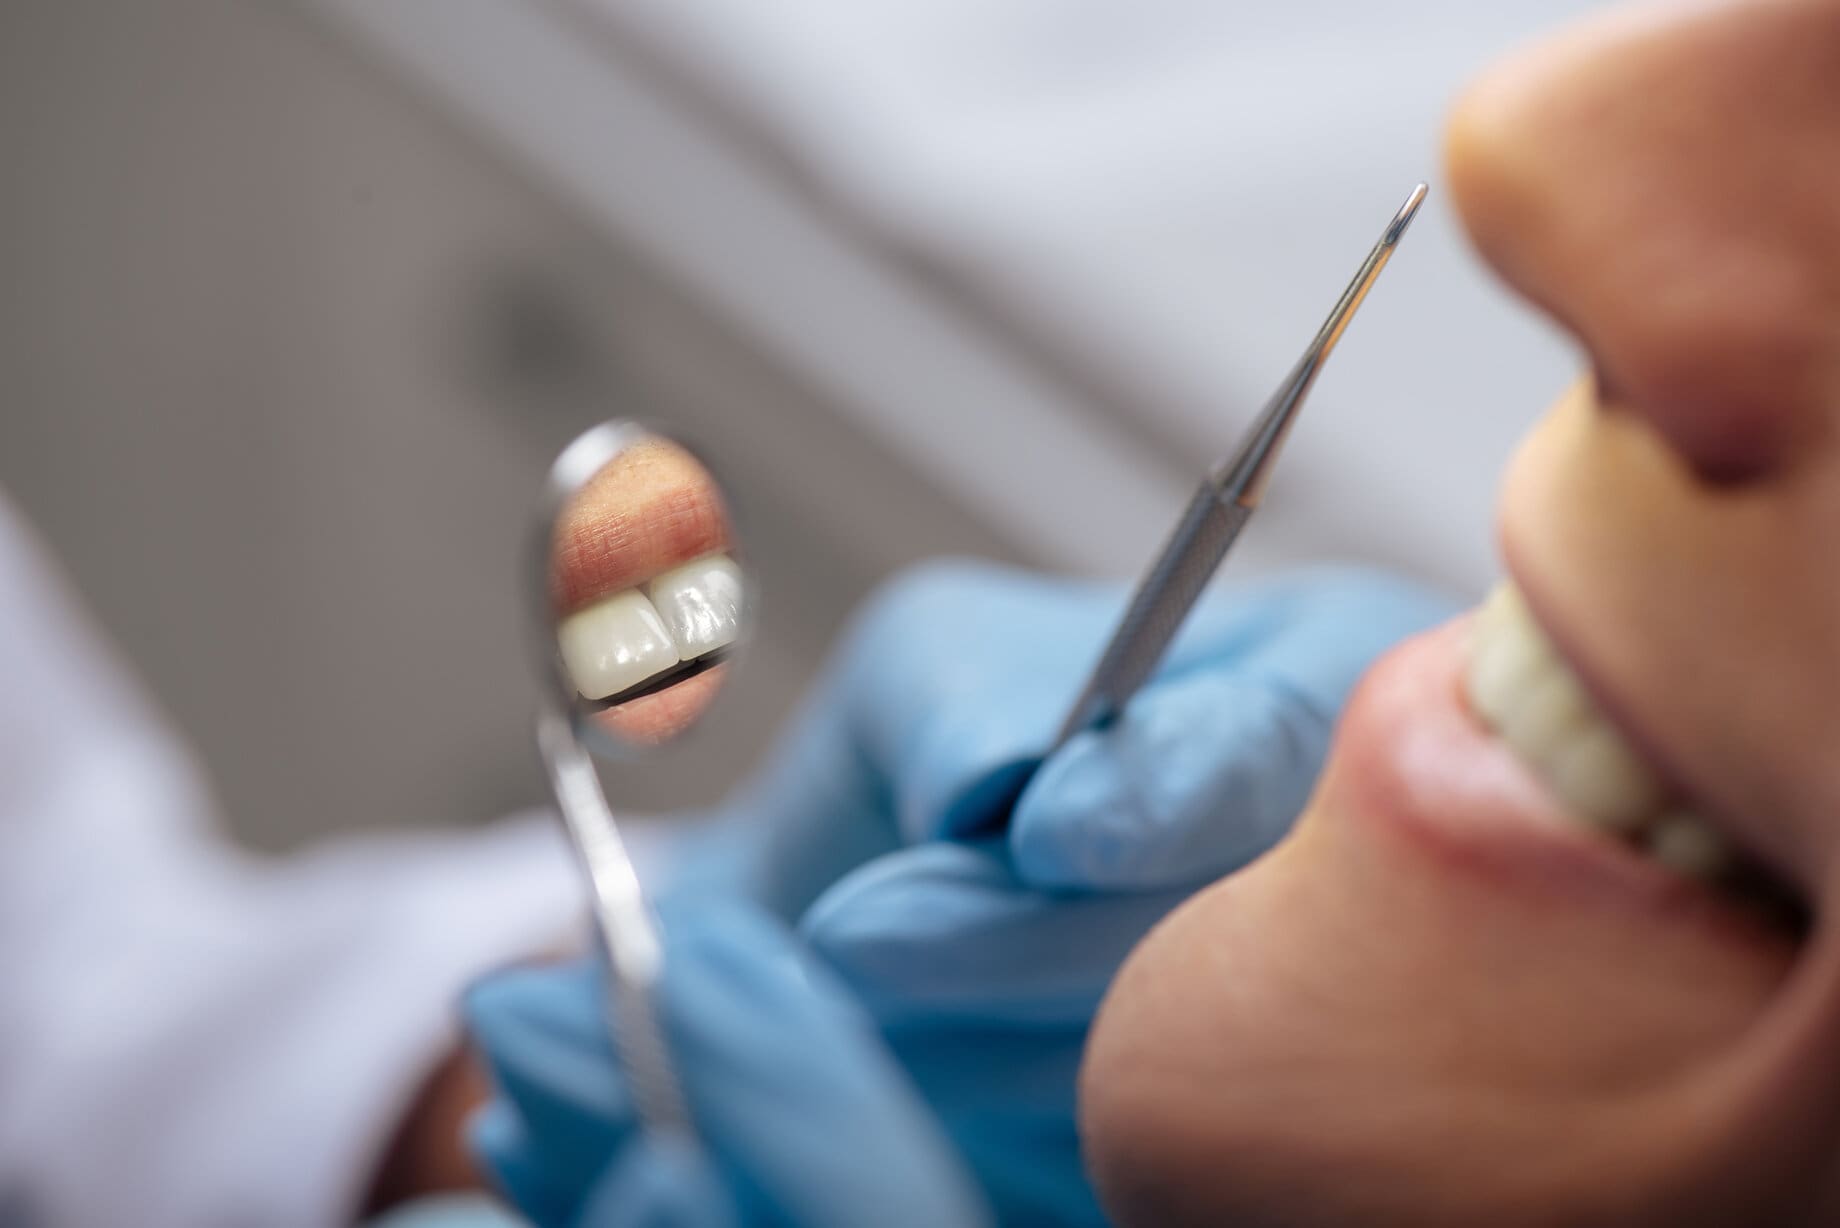 dentist in latex gloves holding dental instruments near smiling man